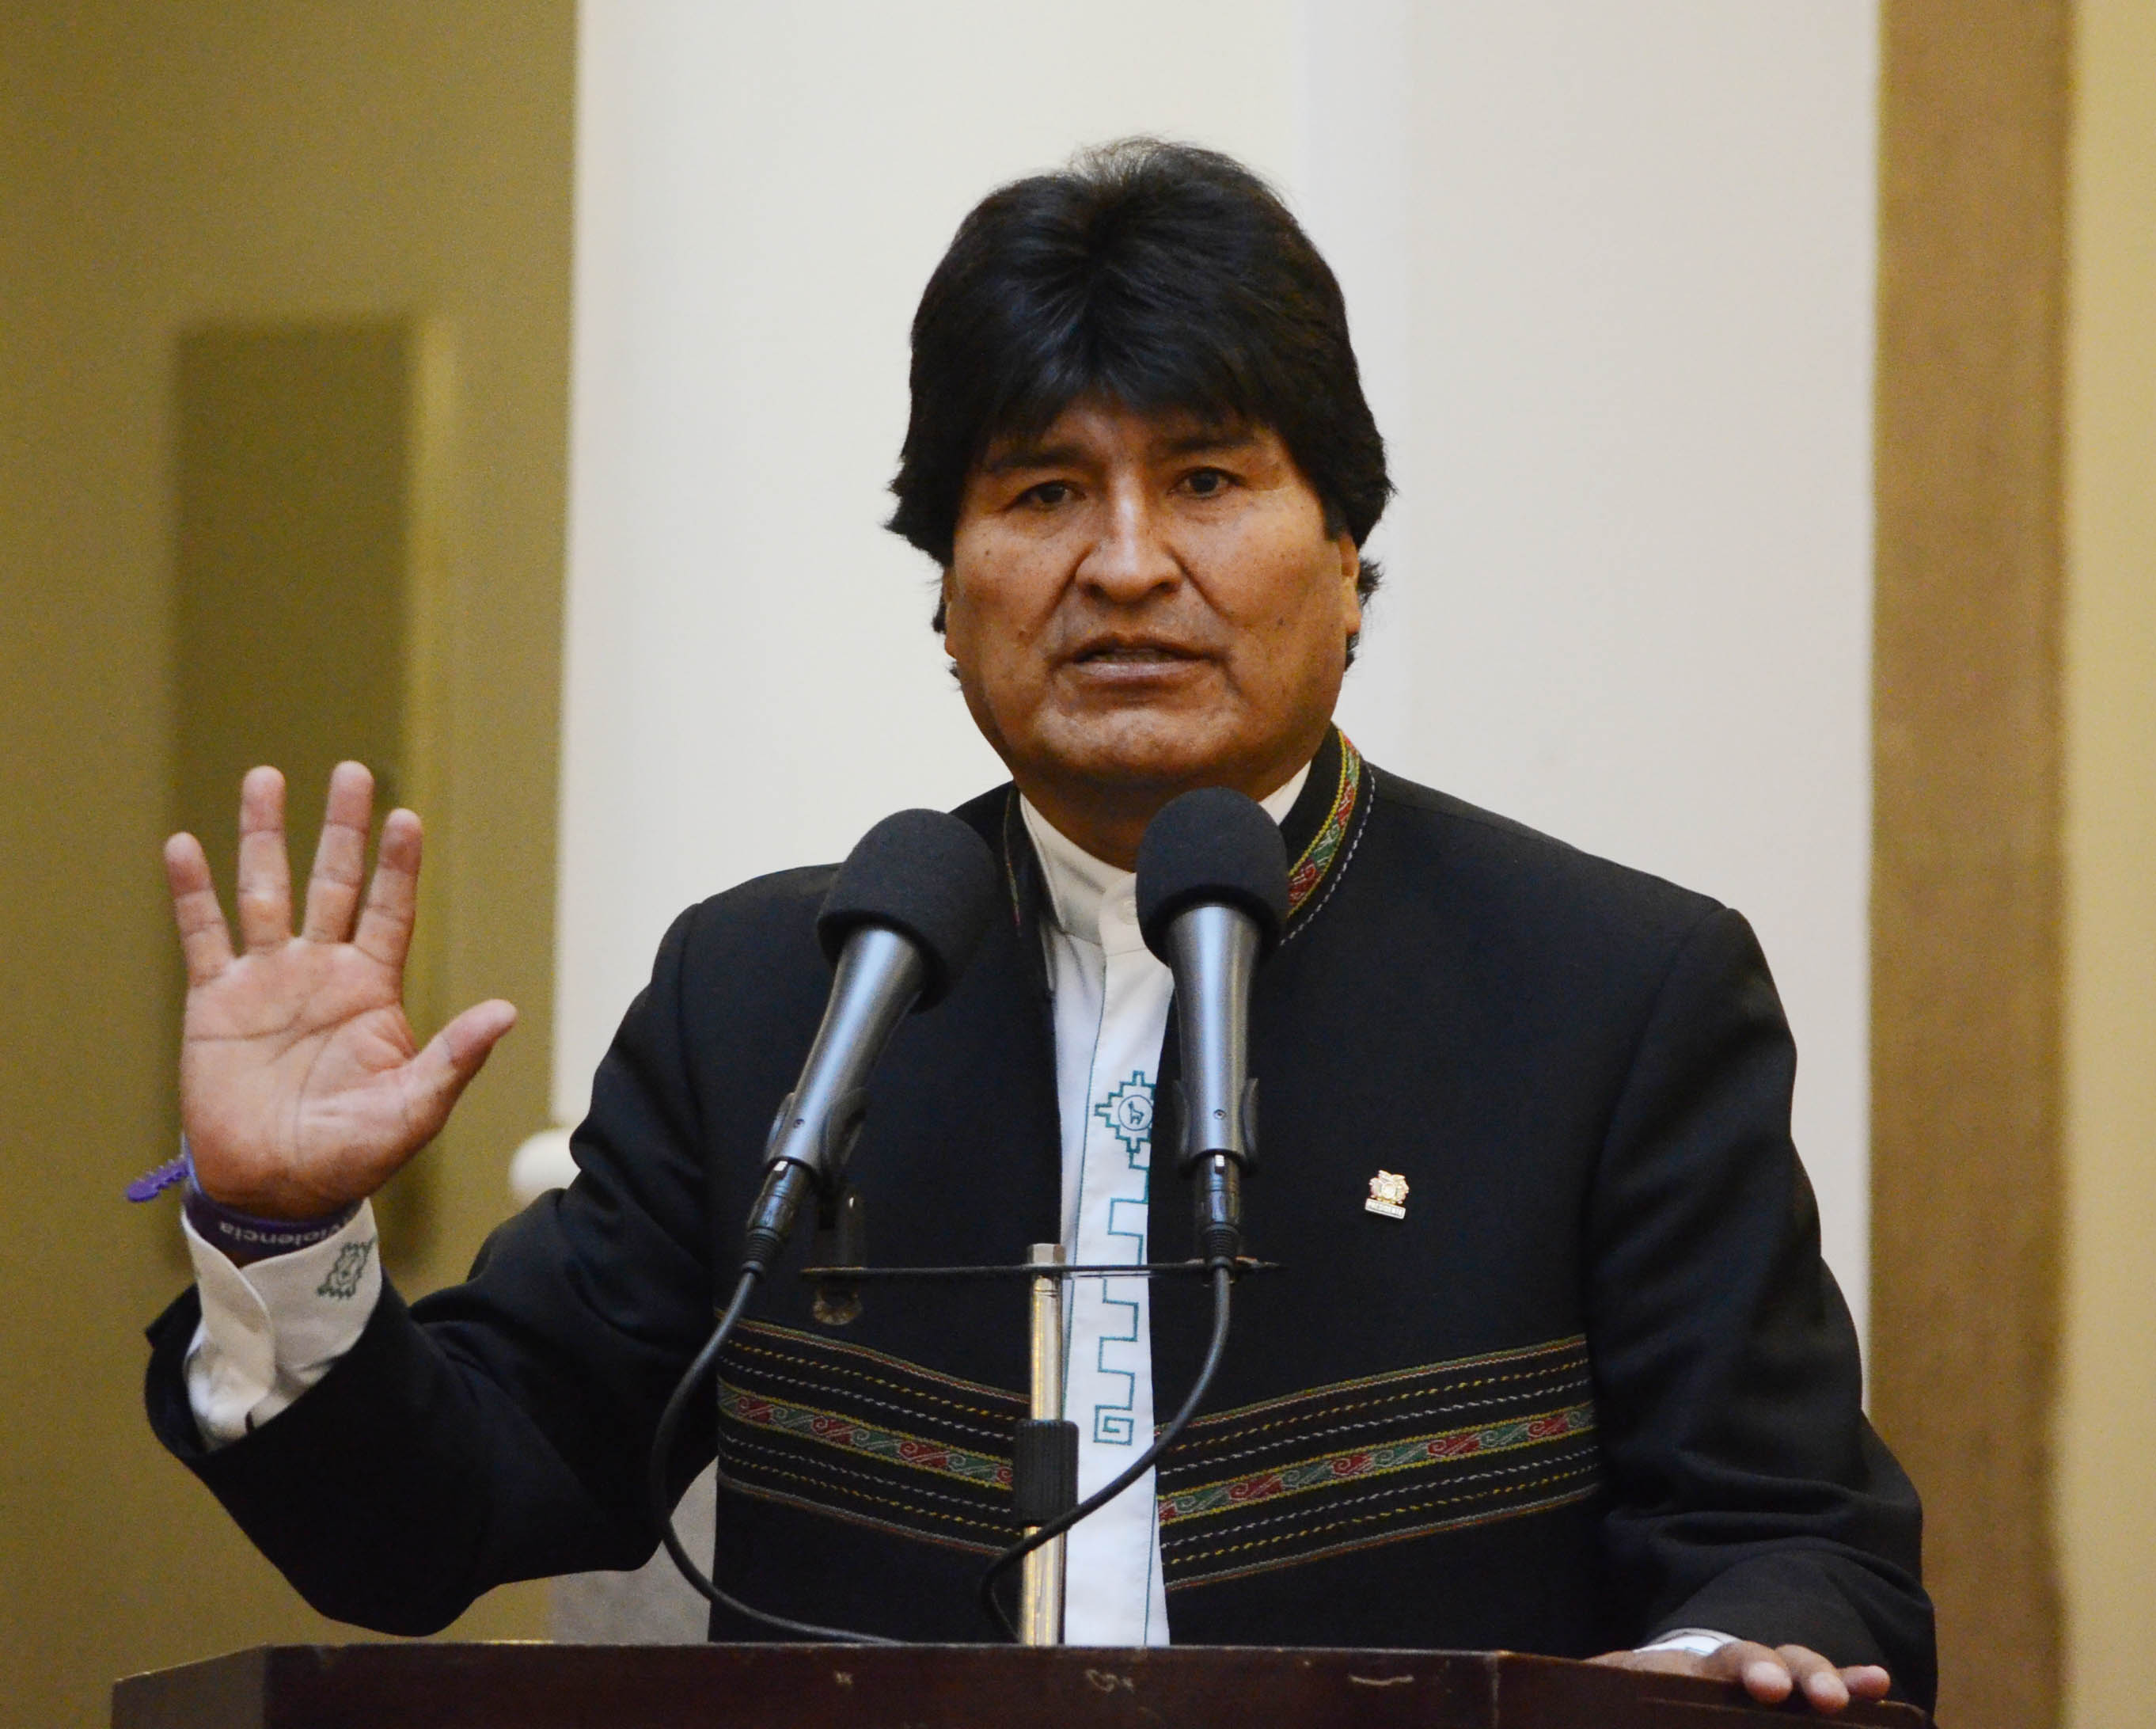 Por que Evo Morales venceu outra vez